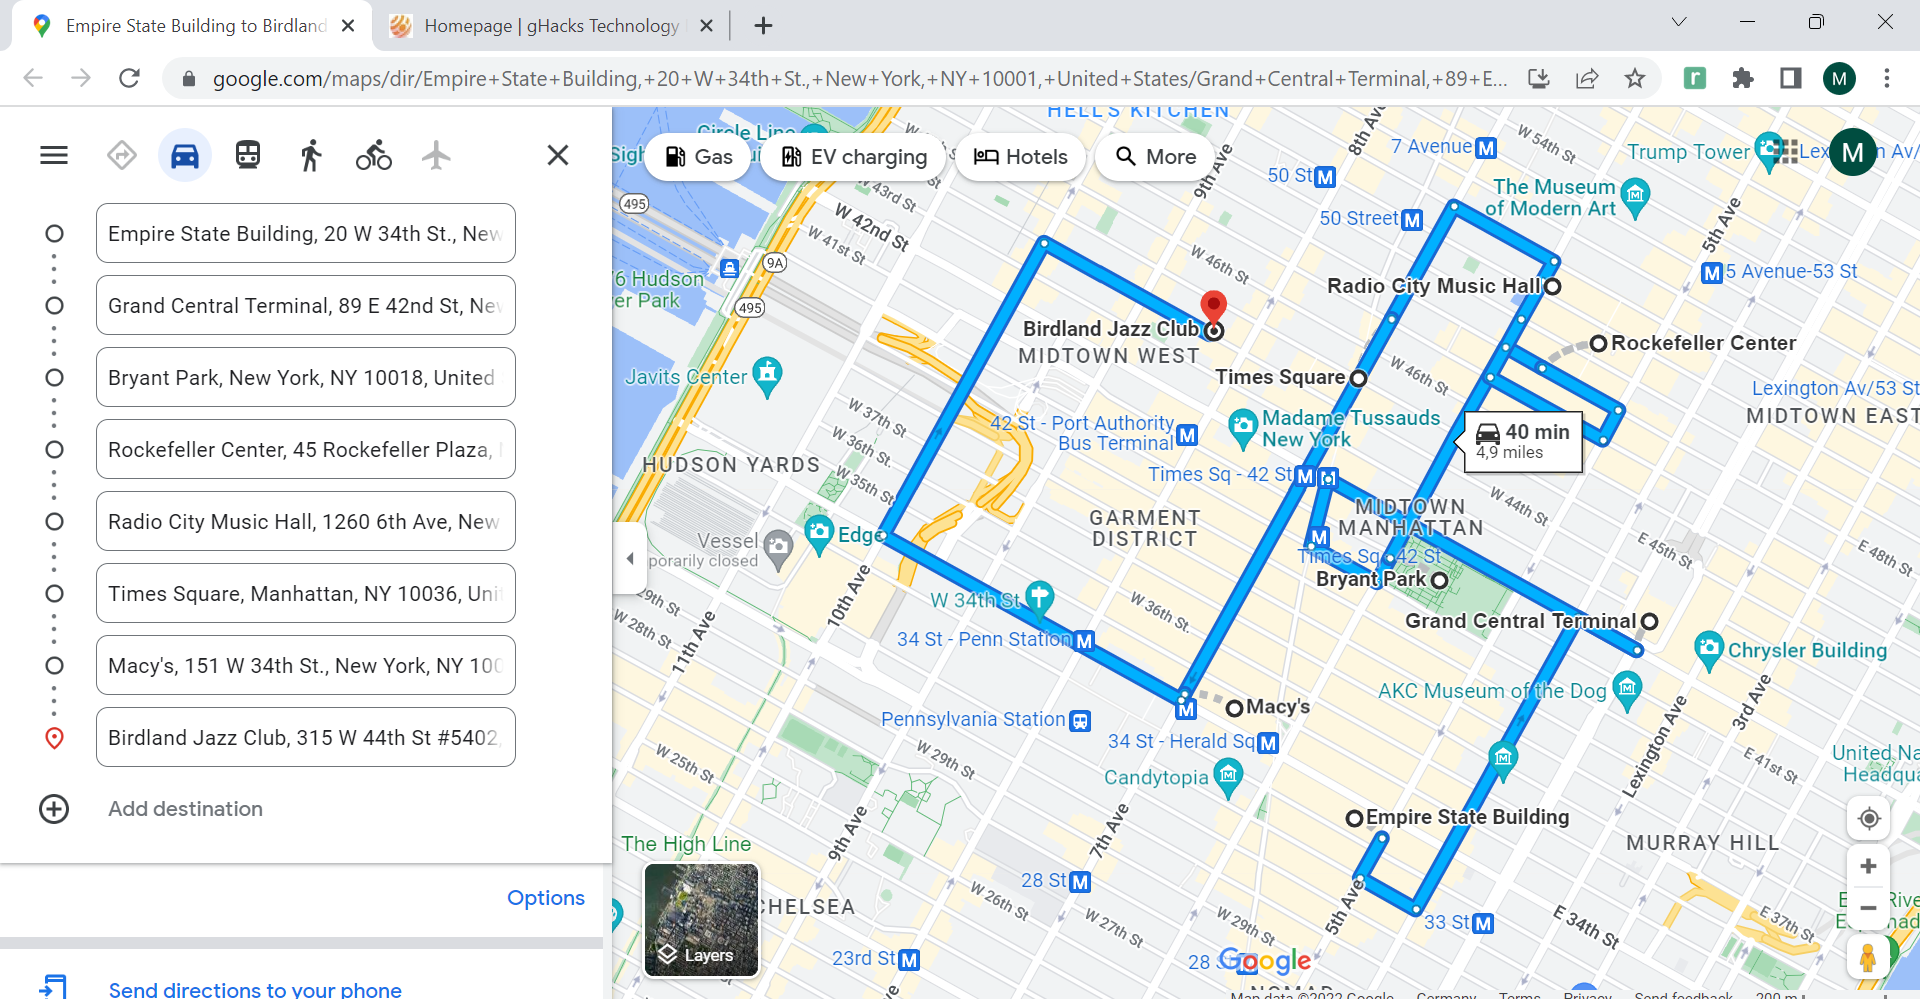 Routora เพิ่มประสิทธิภาพเส้นทางแบบหลายจุดแวะพักของ Google Map เพื่อประหยัดน้ำมันและเวลา